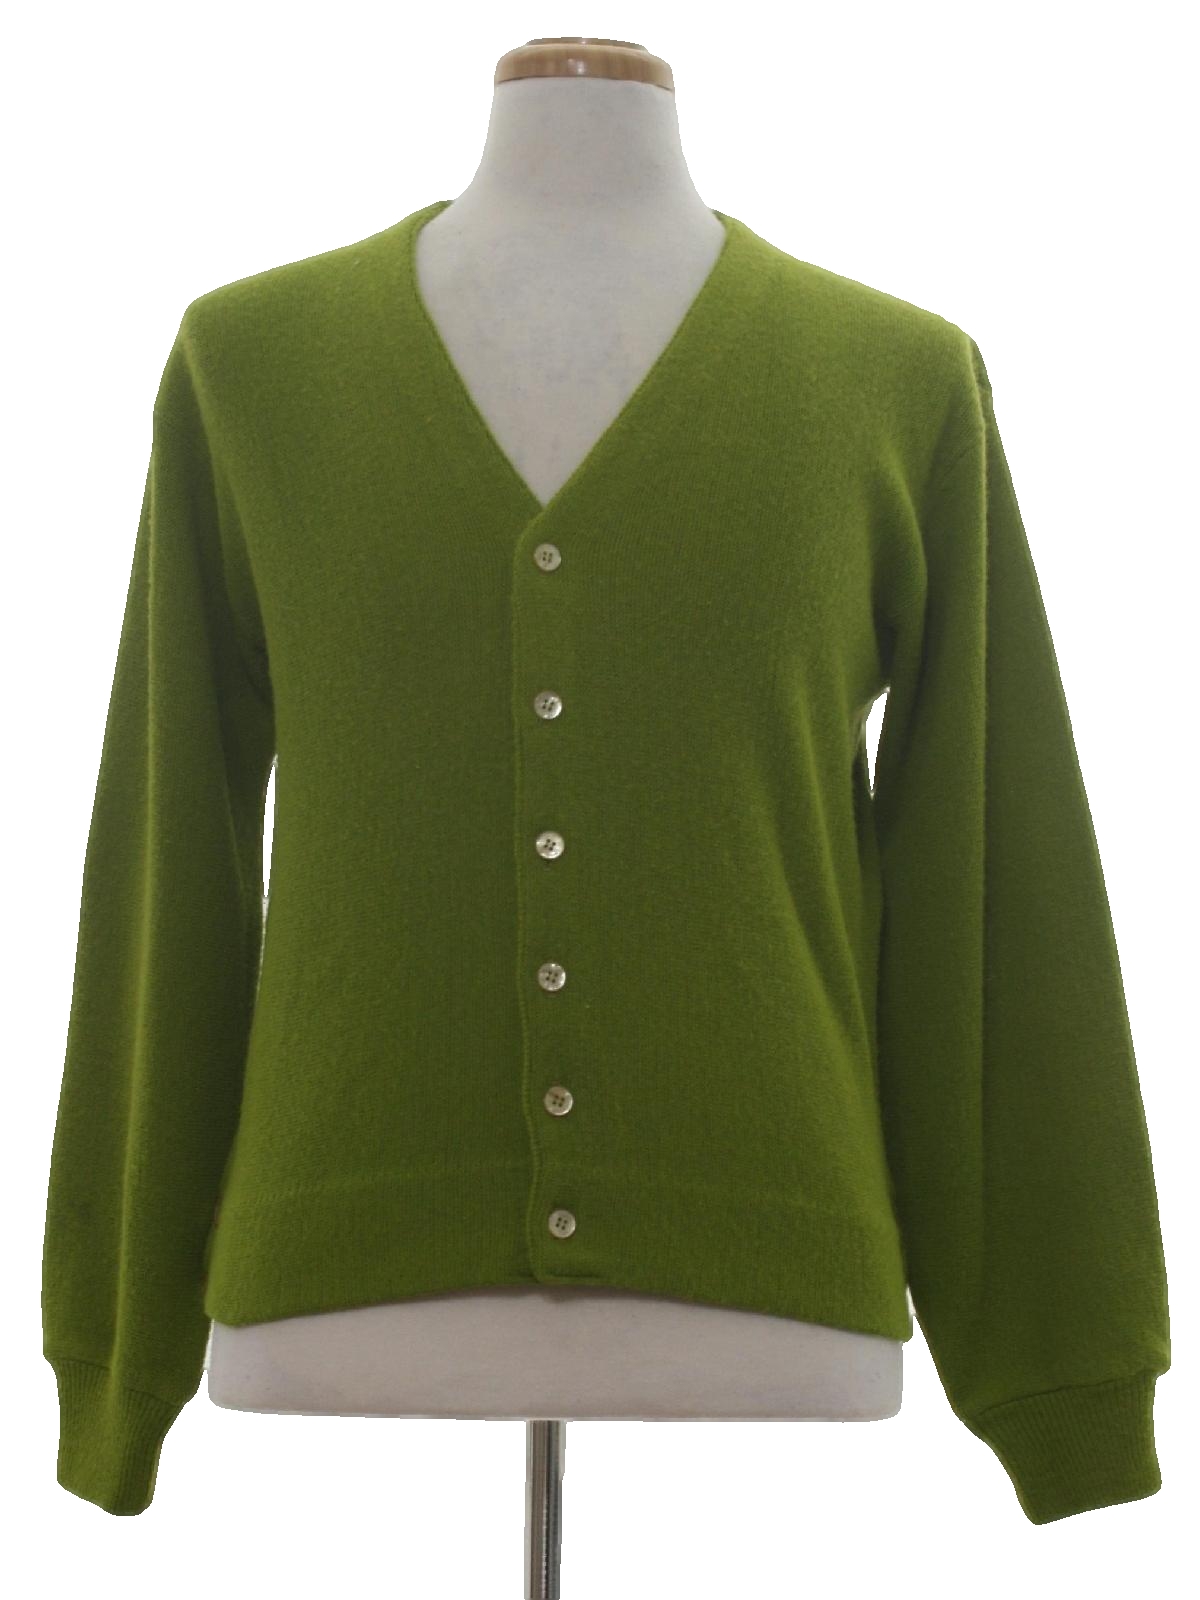 Retro 1970's Caridgan Sweater (Sears) : 70s -Sears- Mens avocado green ...